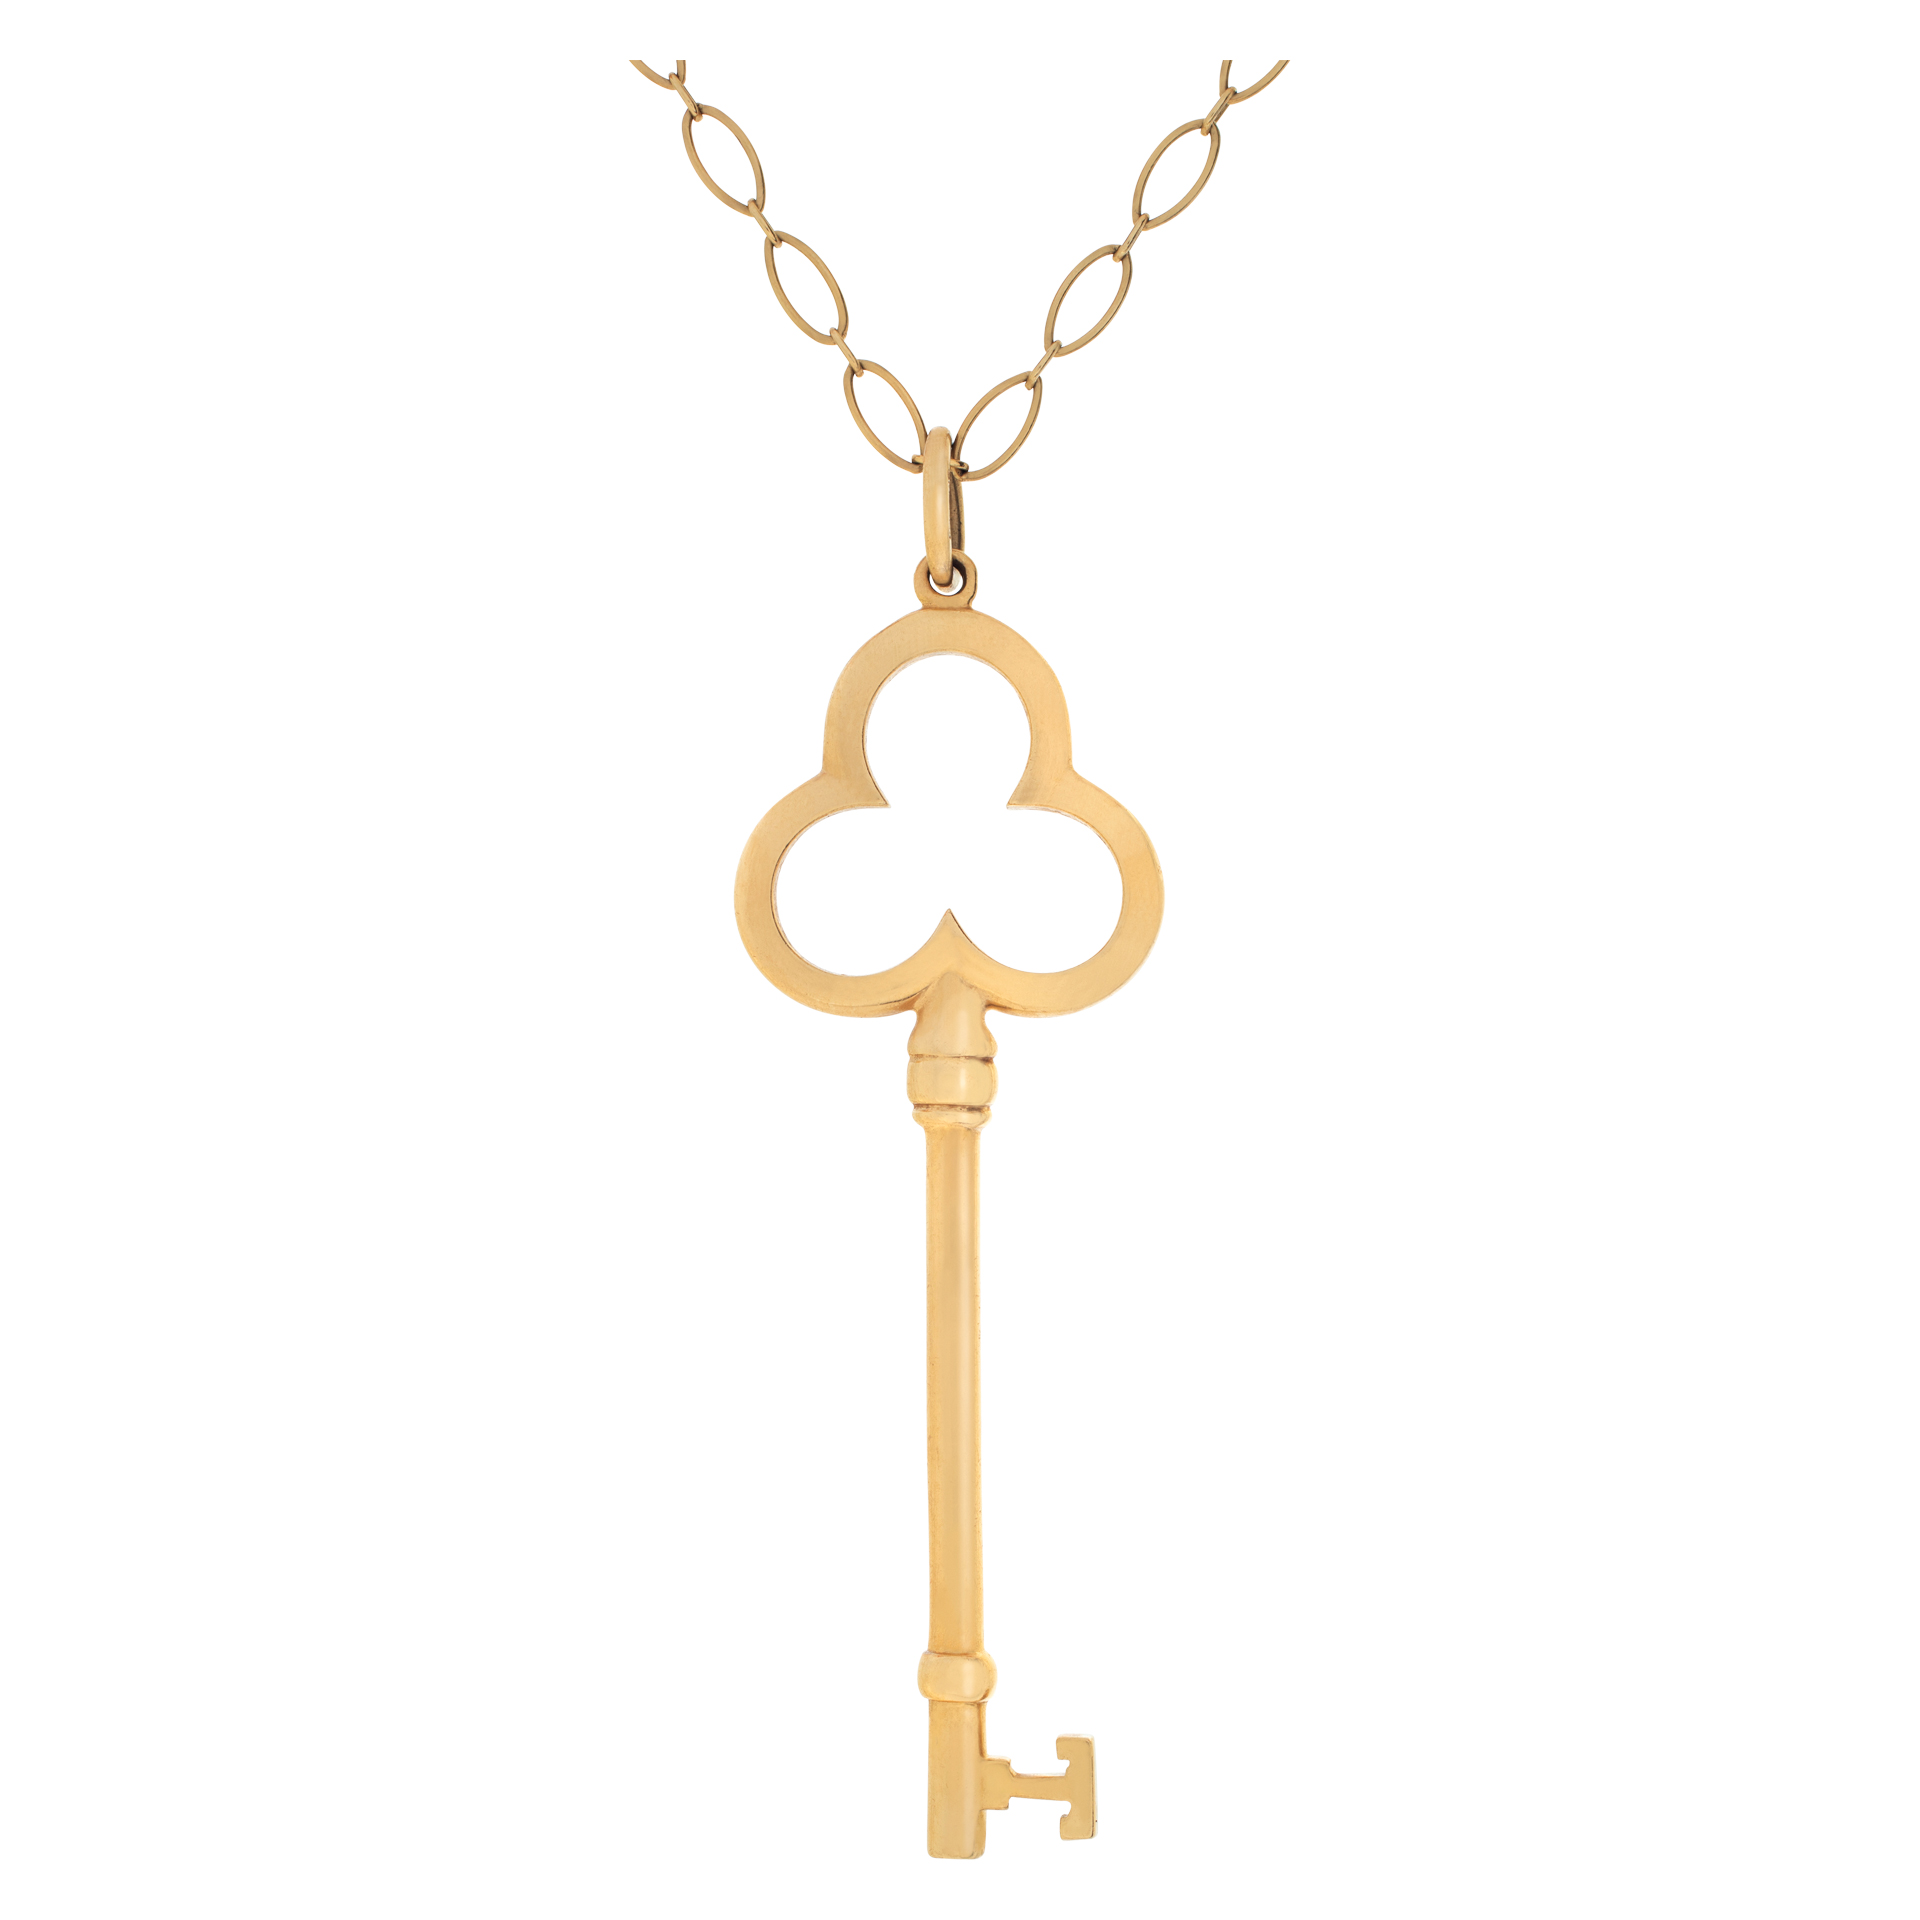 Tiffany & Co. Open Trefoil key pendant and chain in 18k yellow goldTiffany & Co. Open Trefoil key pendant and chain in 18k yellow gold